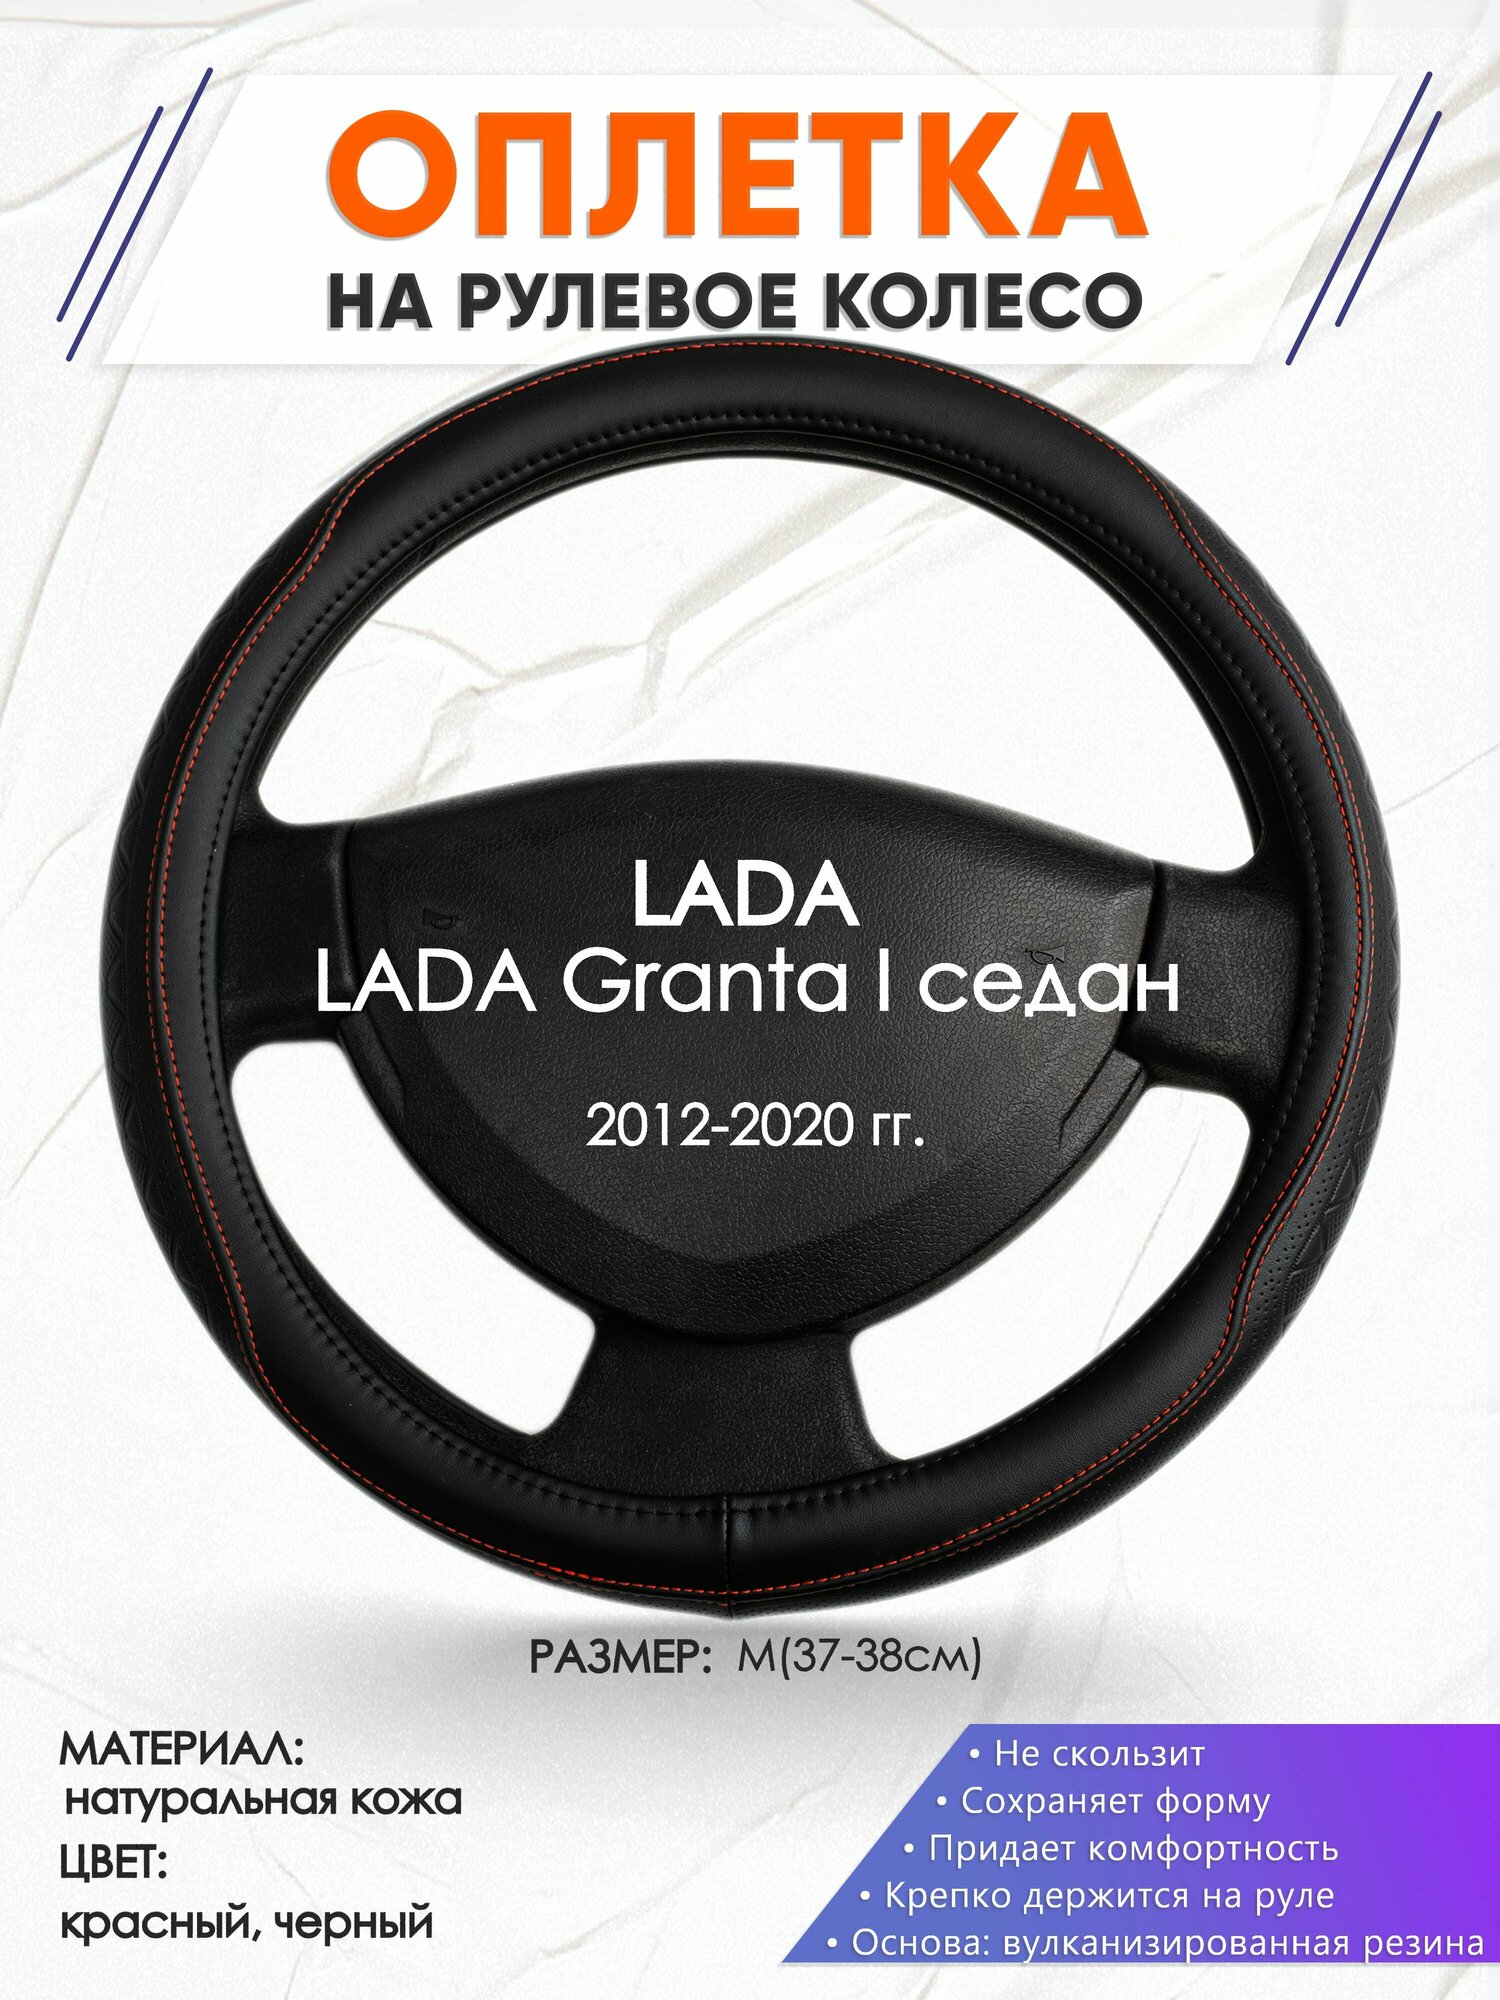 Оплетка наруль для LADA Granta I седан(Лада Гранта) 2012-2020 годов выпуска, размер M(37-38см), Натуральная кожа 90